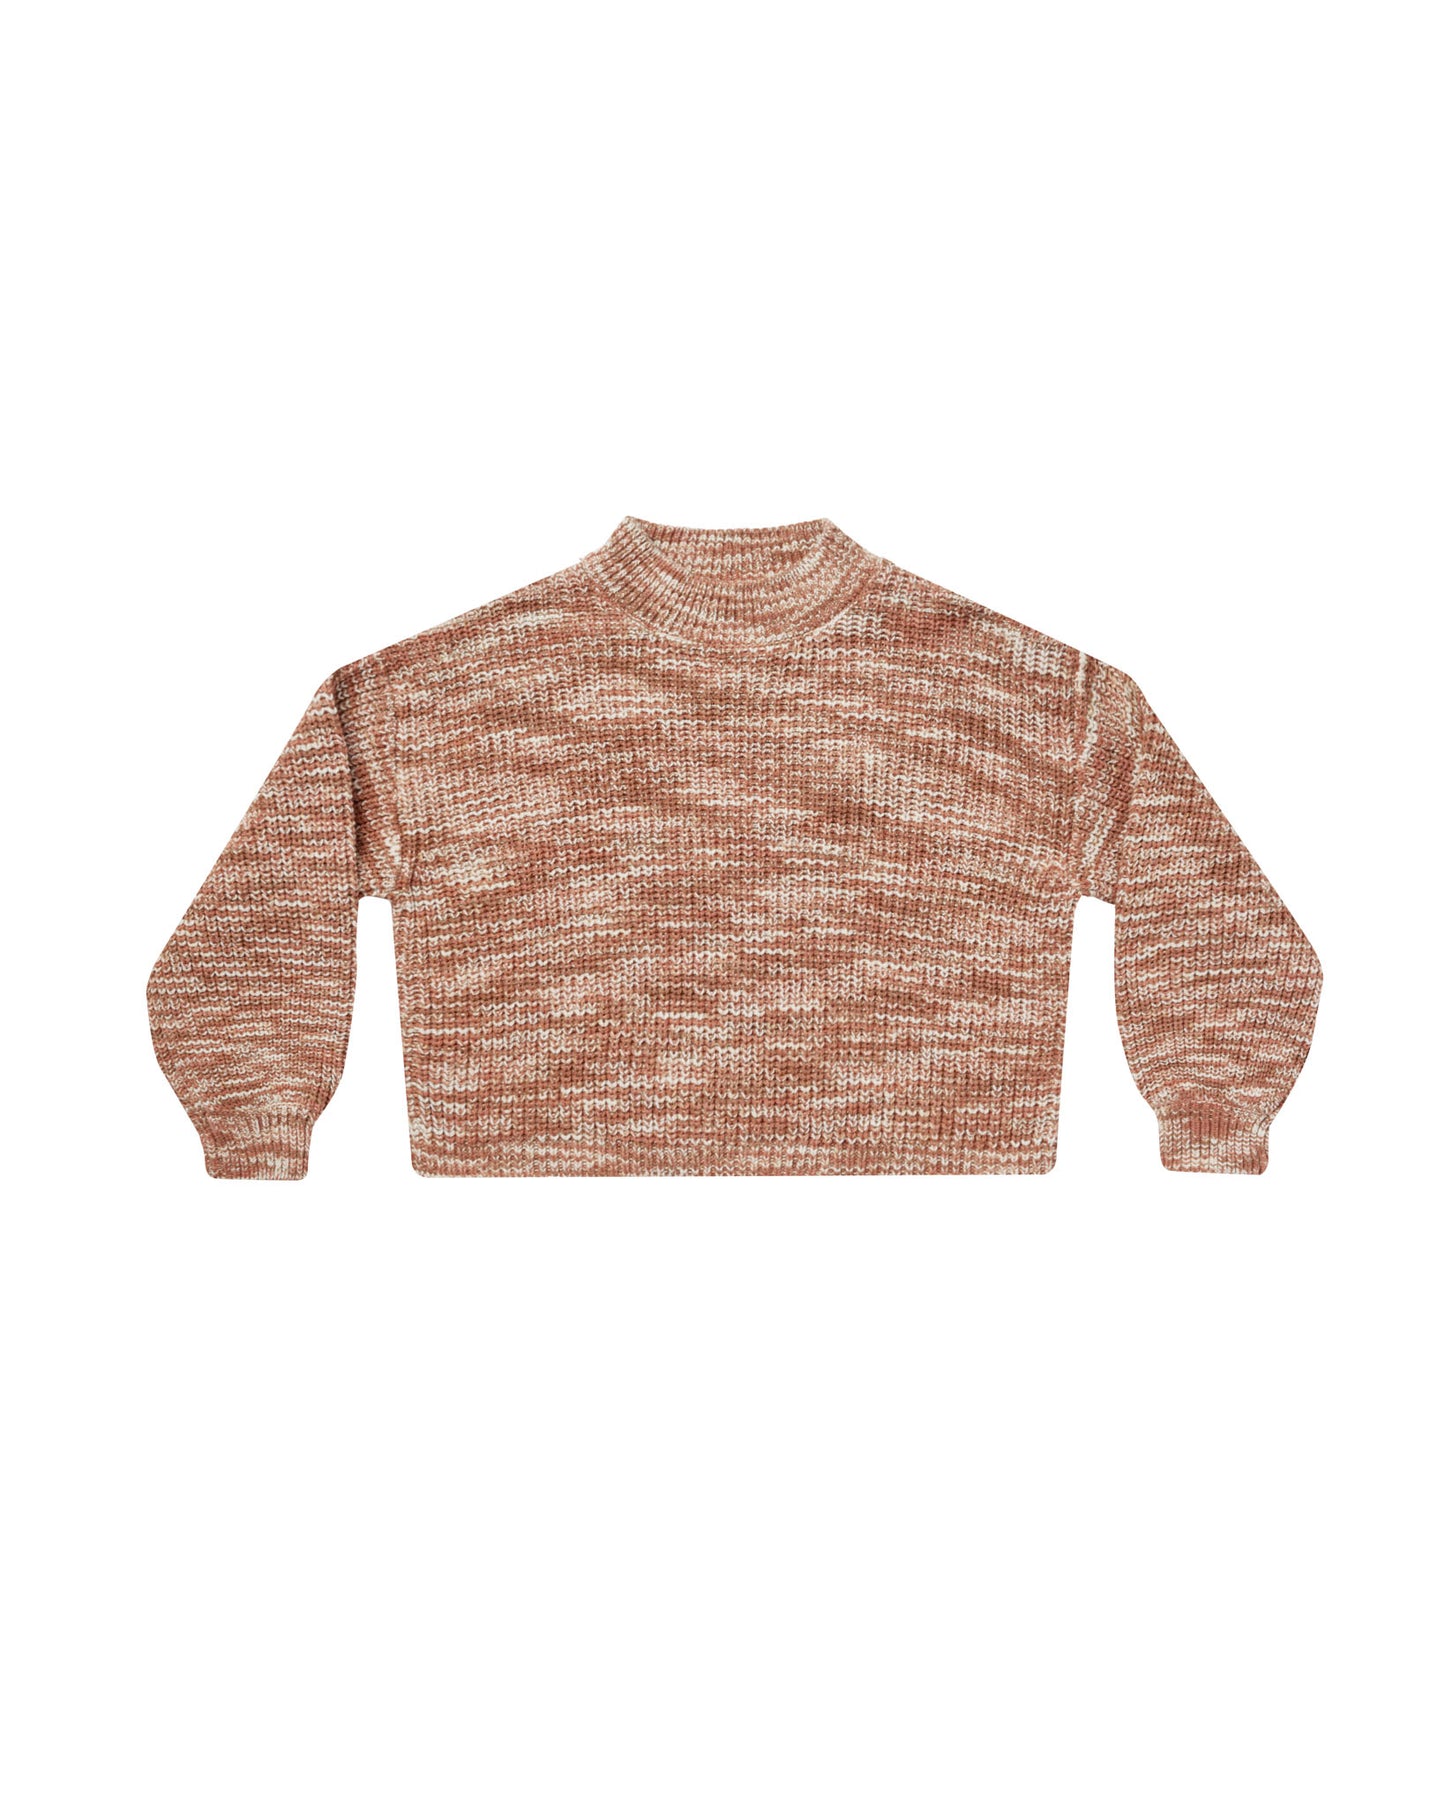 Rylee + Cru - Knit Sweater - Heathered Spice